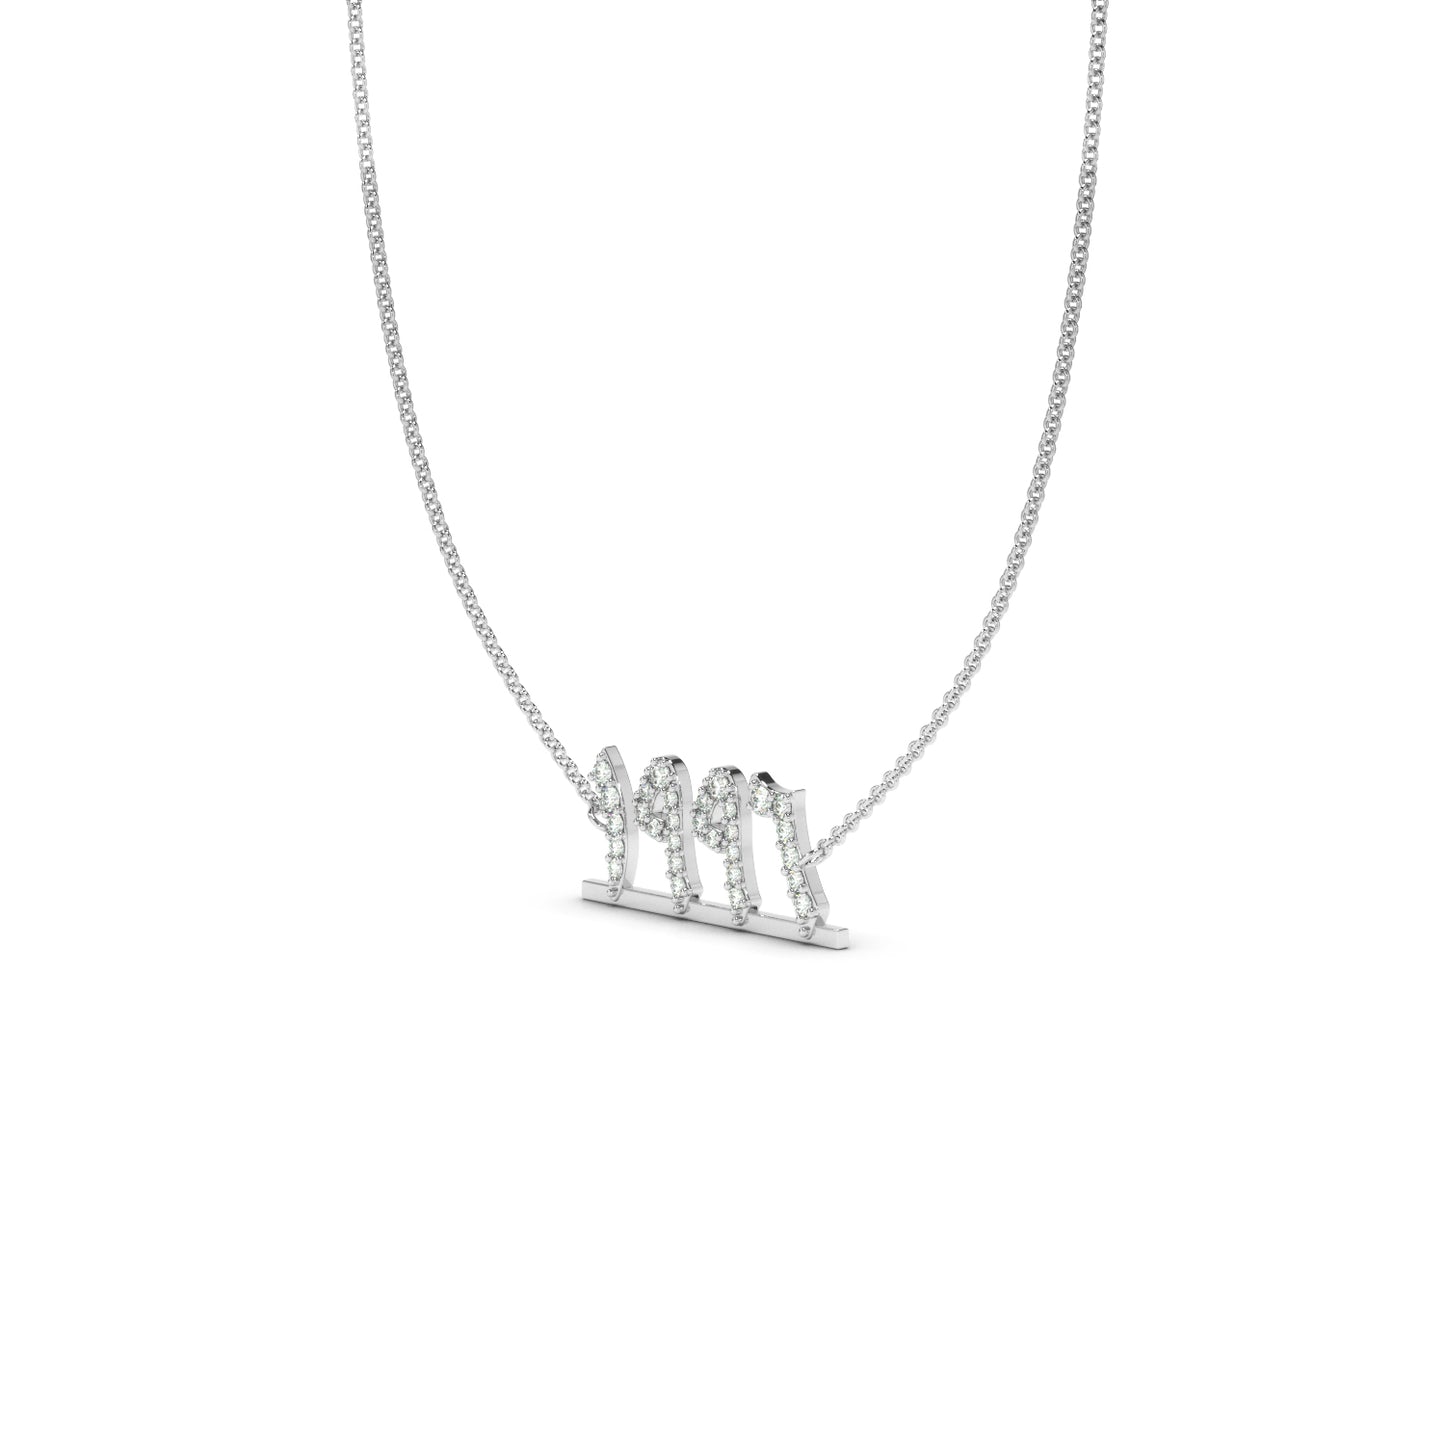 Customize your Pavé Diamond Numra Necklace